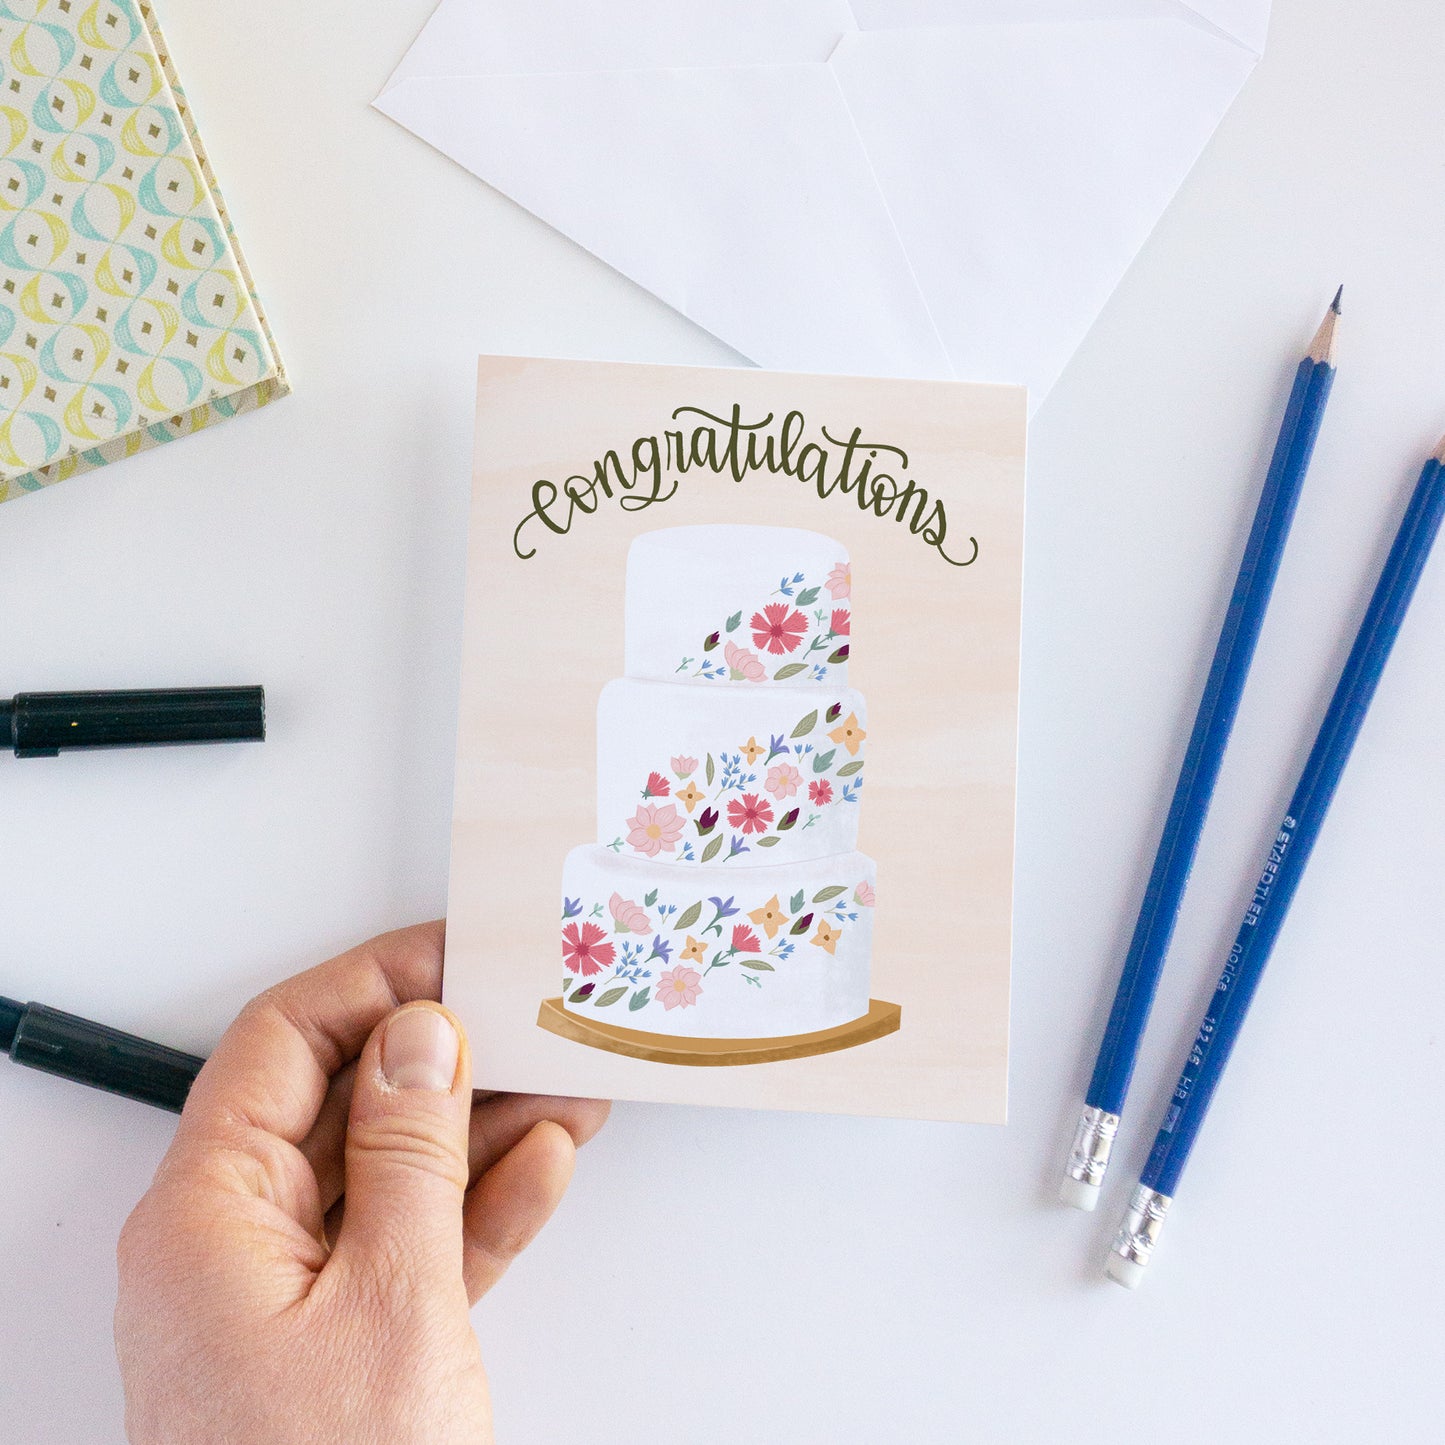 Congratulations Wedding Cake Love Card